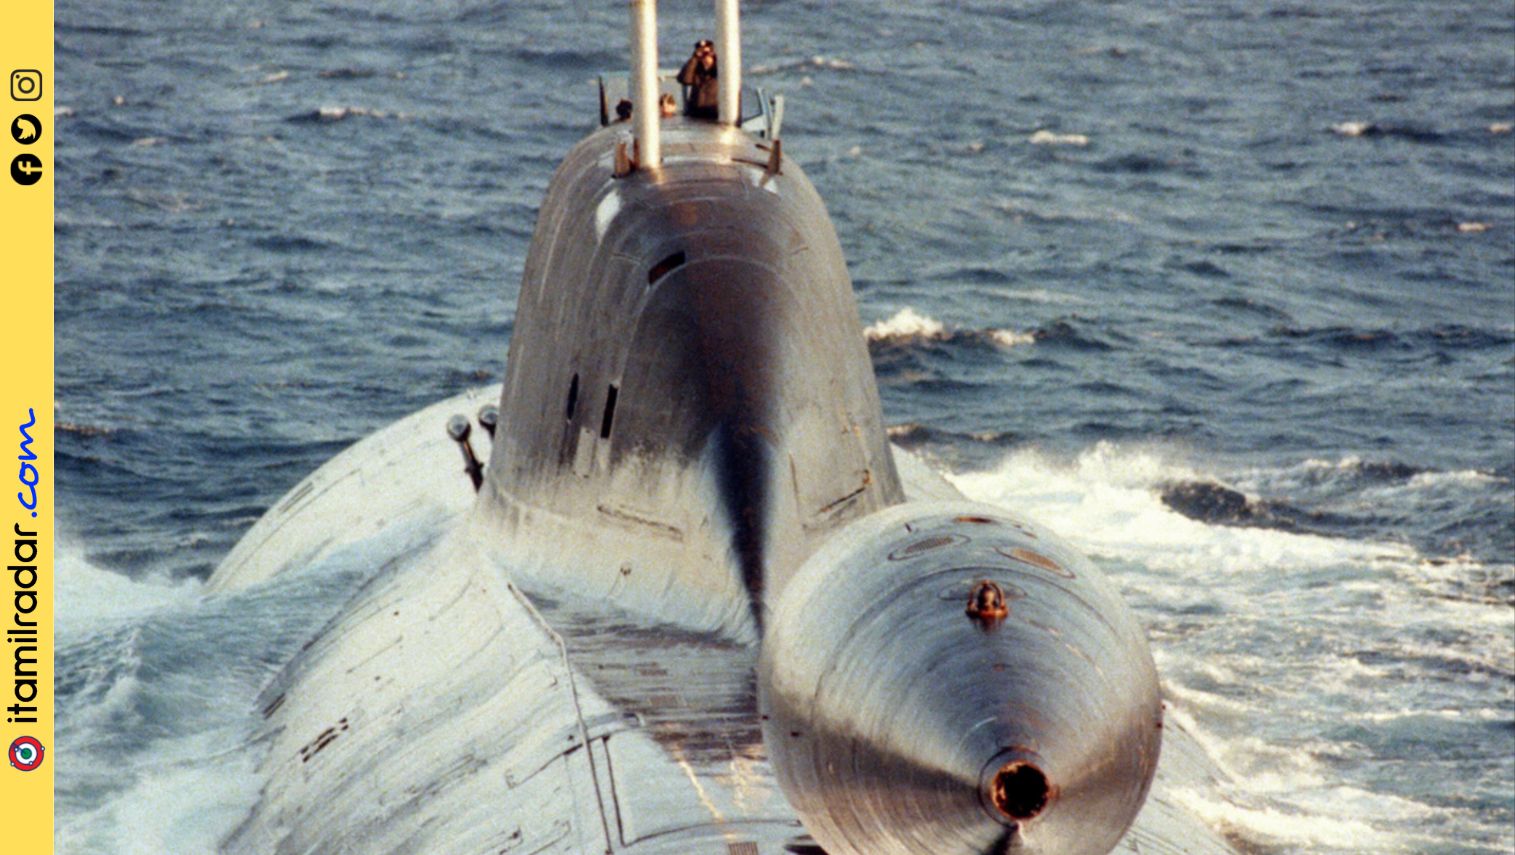 Sierra Class Submarine